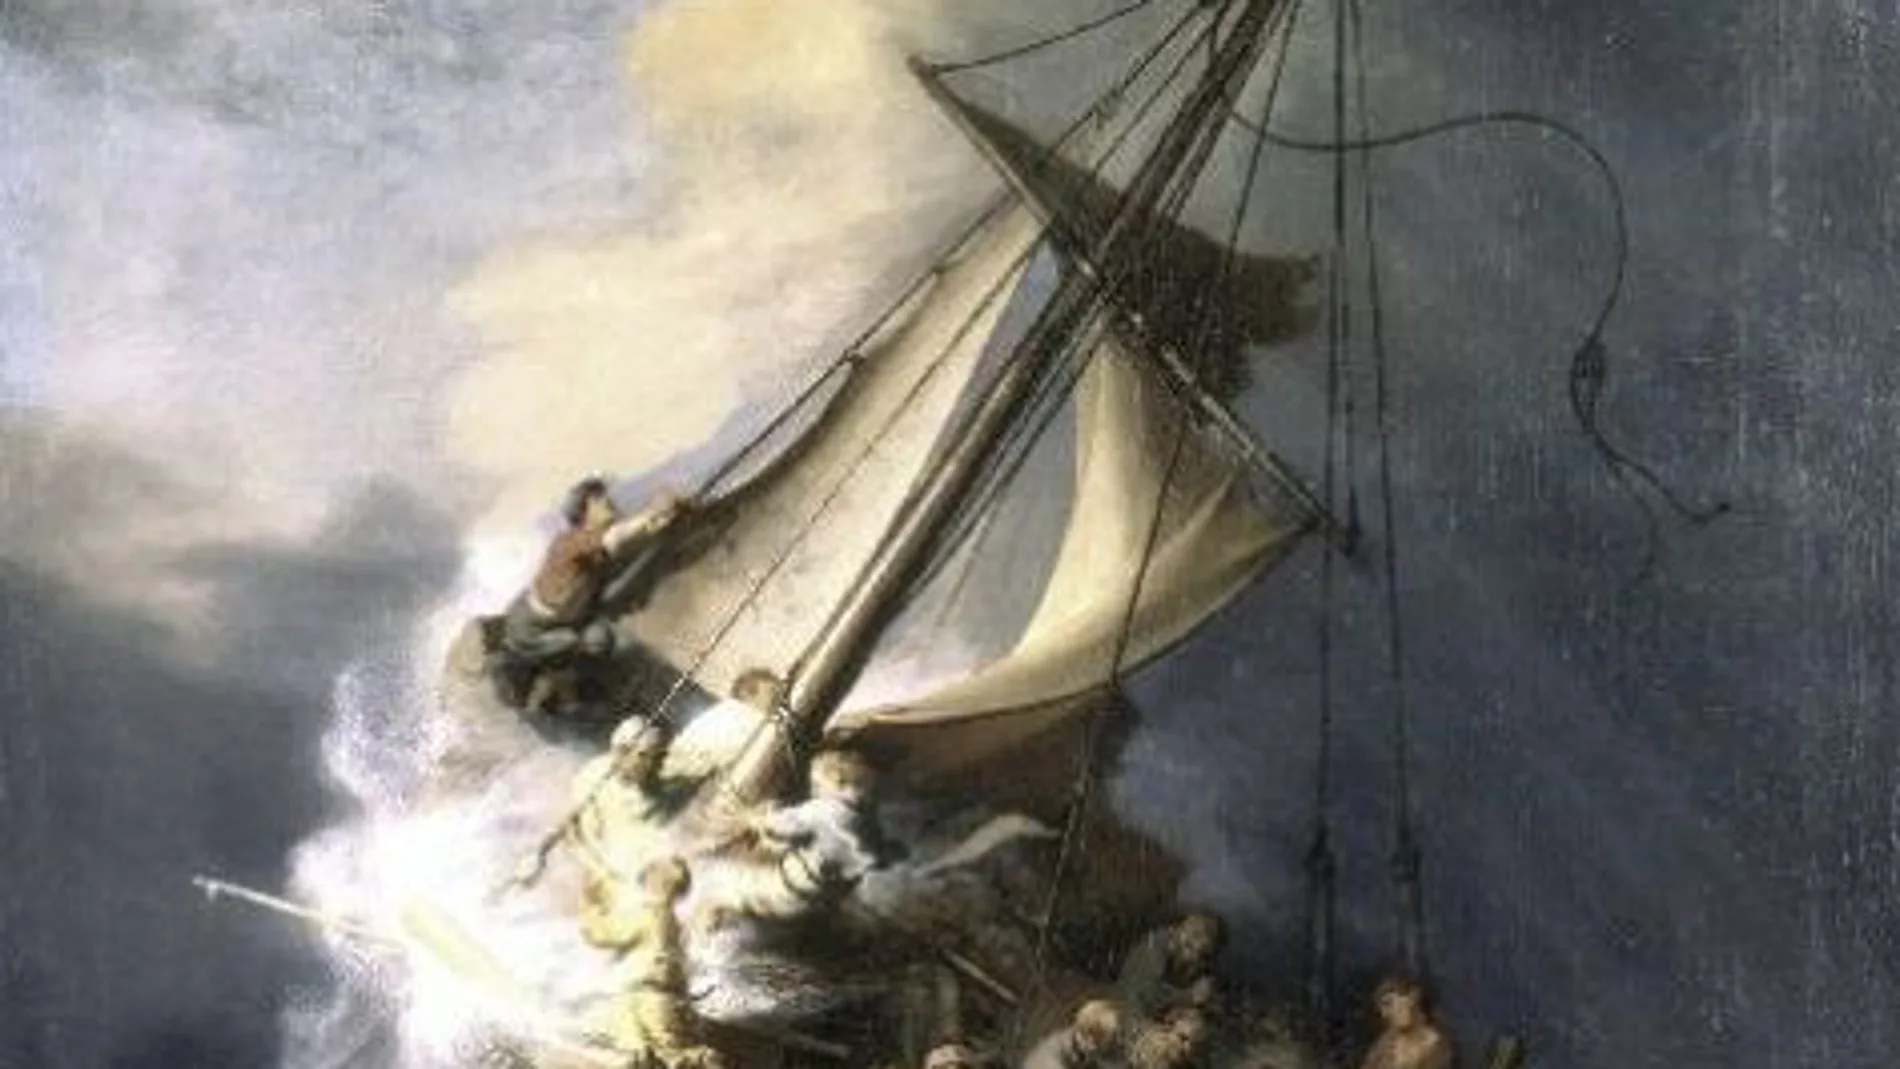 'Tormenta en el Mar de Galilea', de Rembrandt